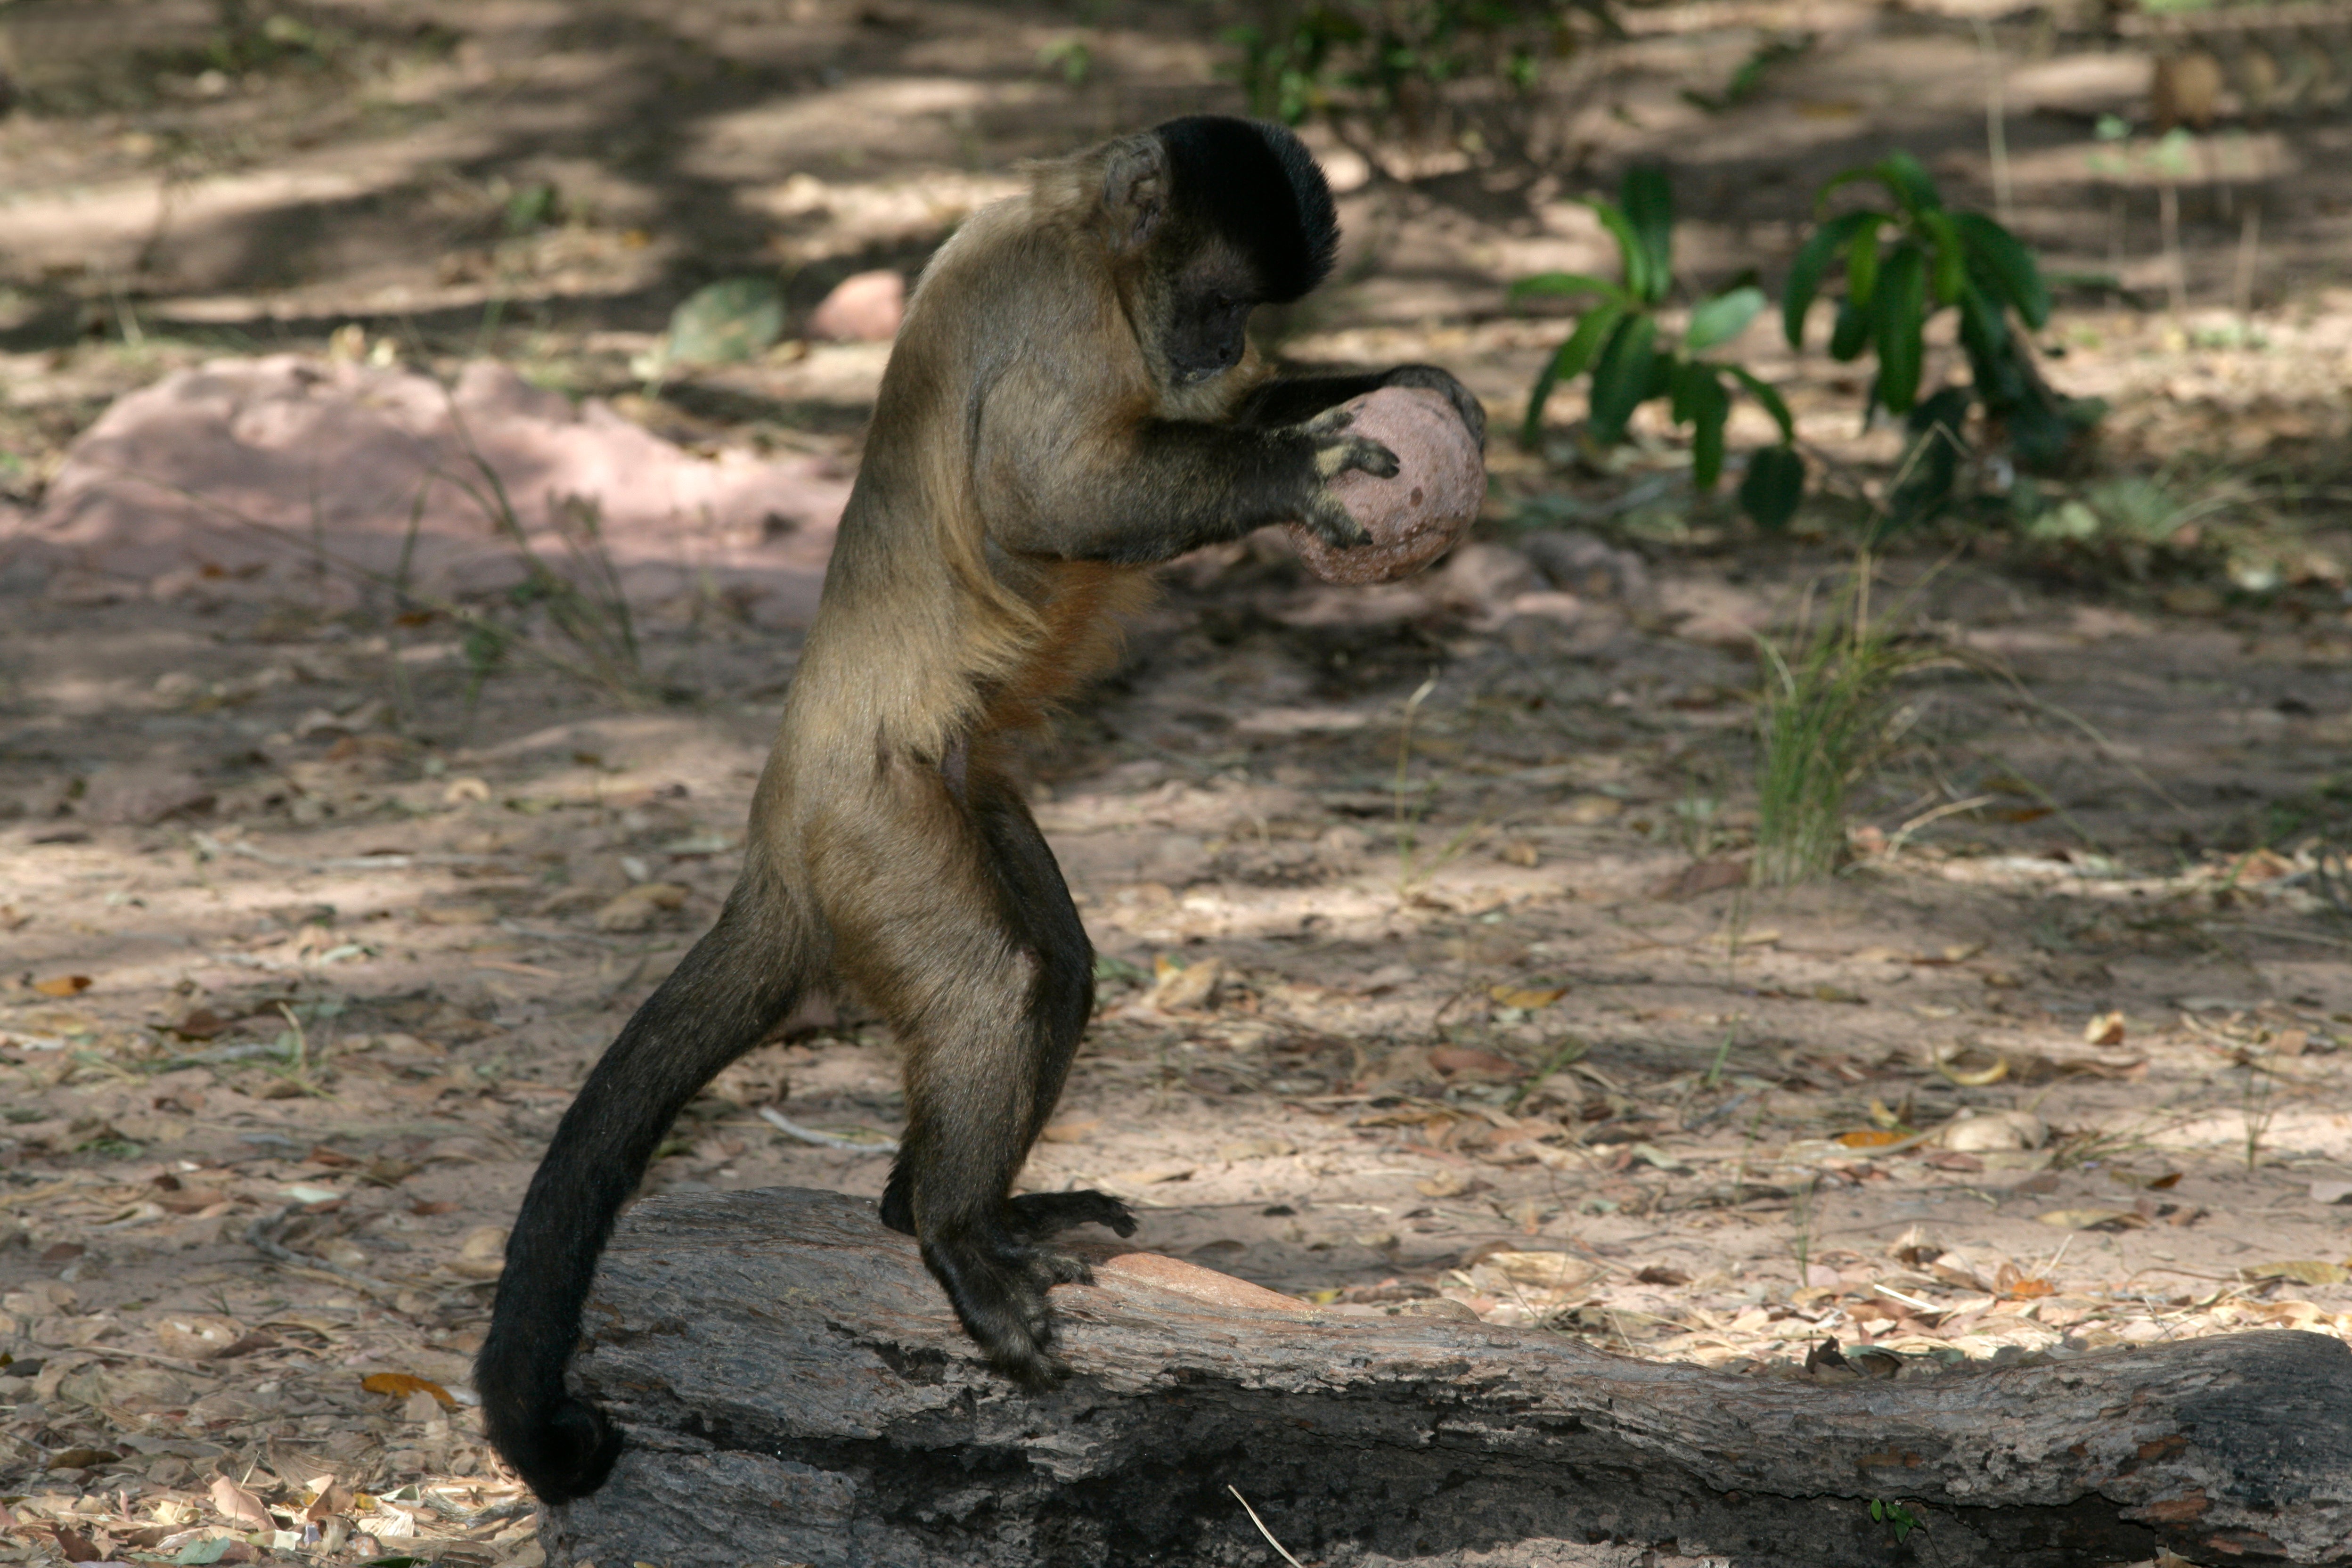 capuchin monkey standing up